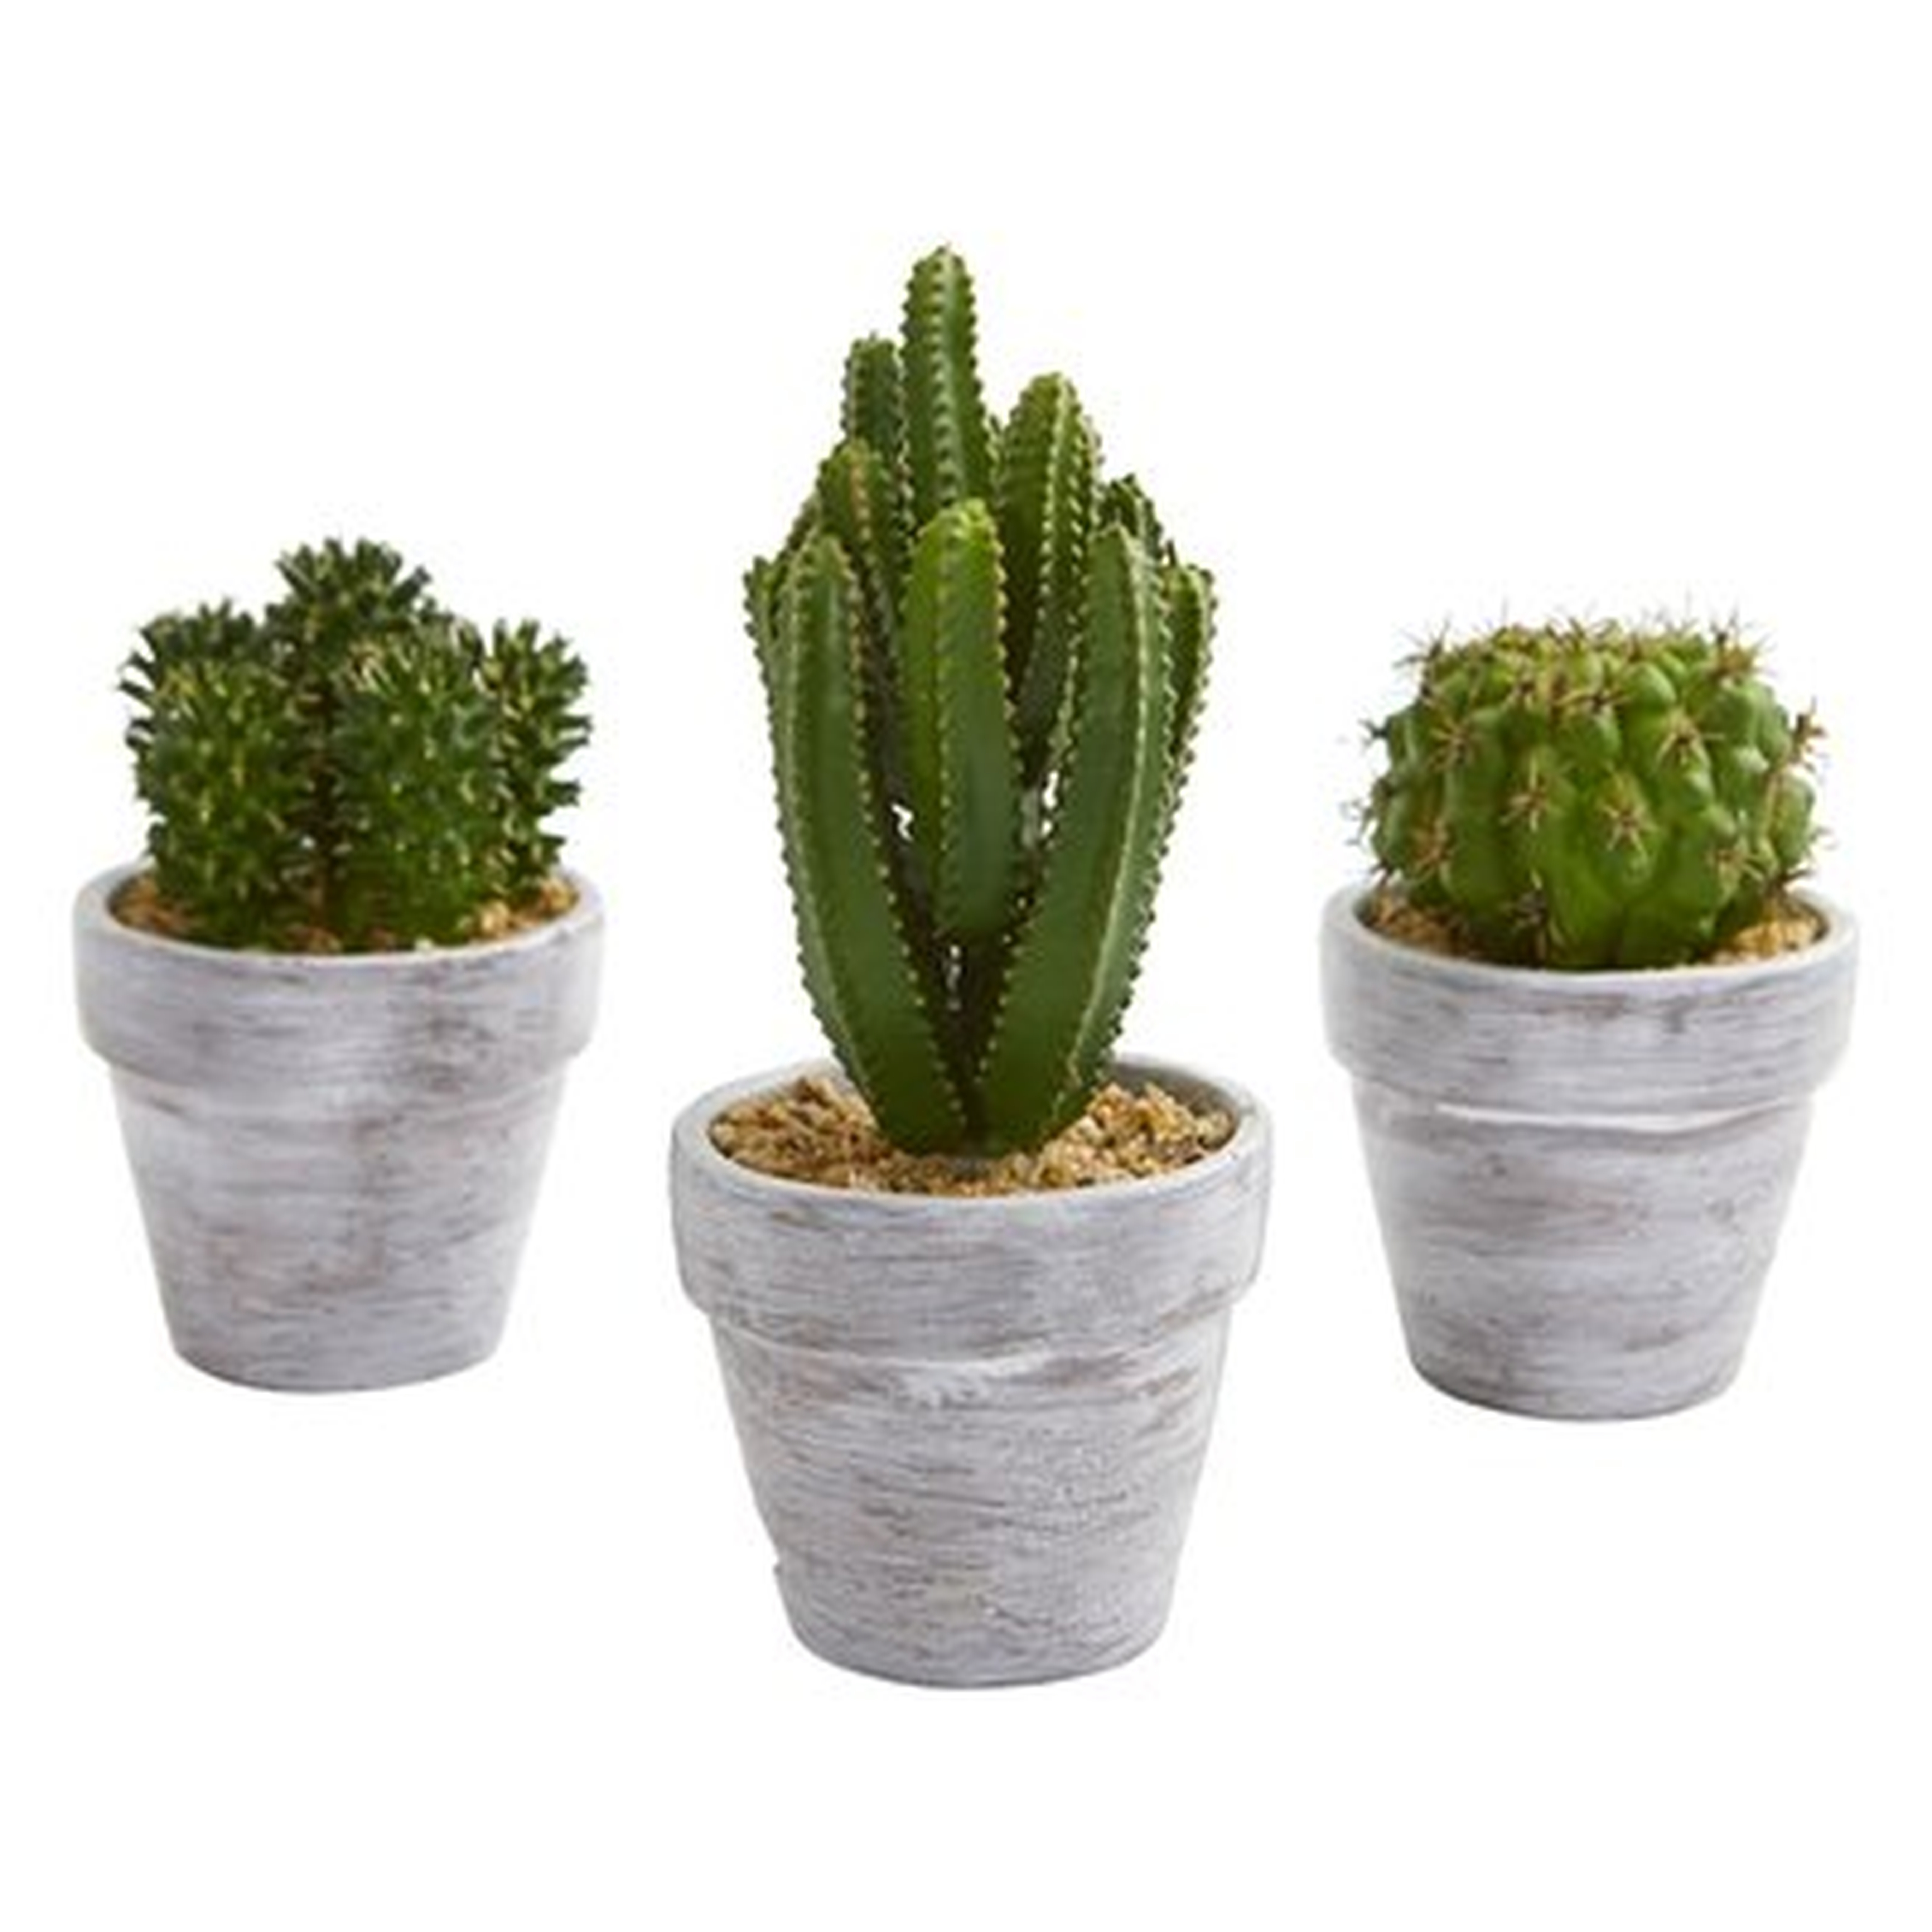 3 Piece Artificial Cactus Plant in Pot Set - Wayfair